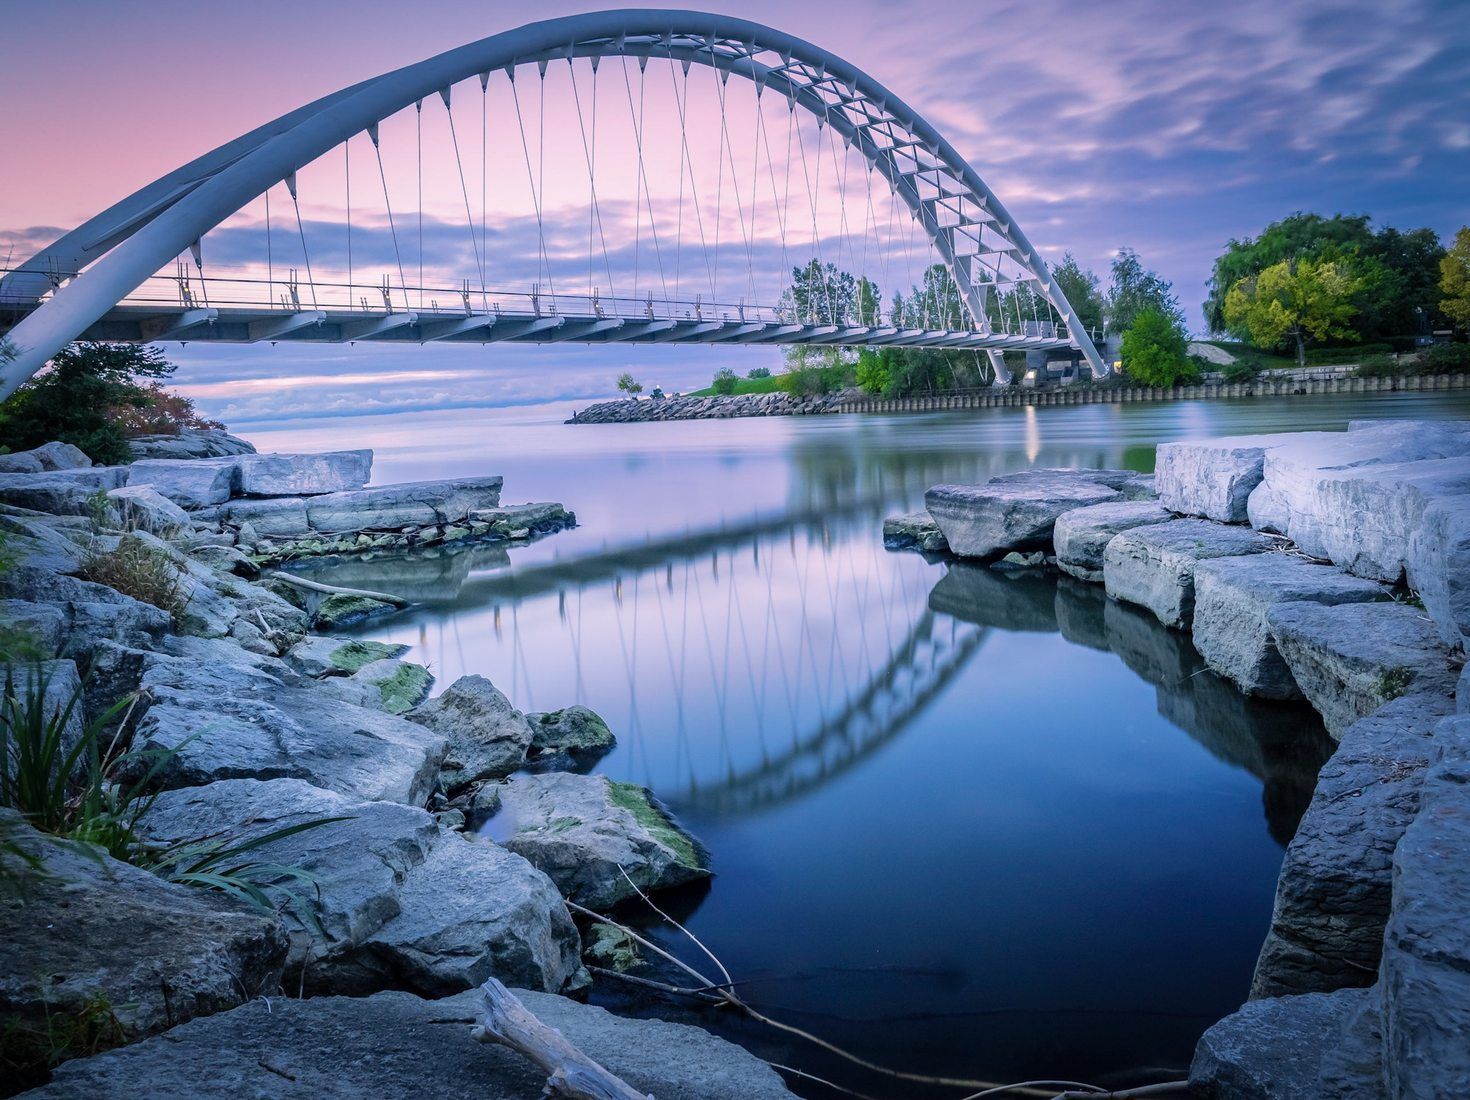 Humber Bay Arch Bridge in Toronto